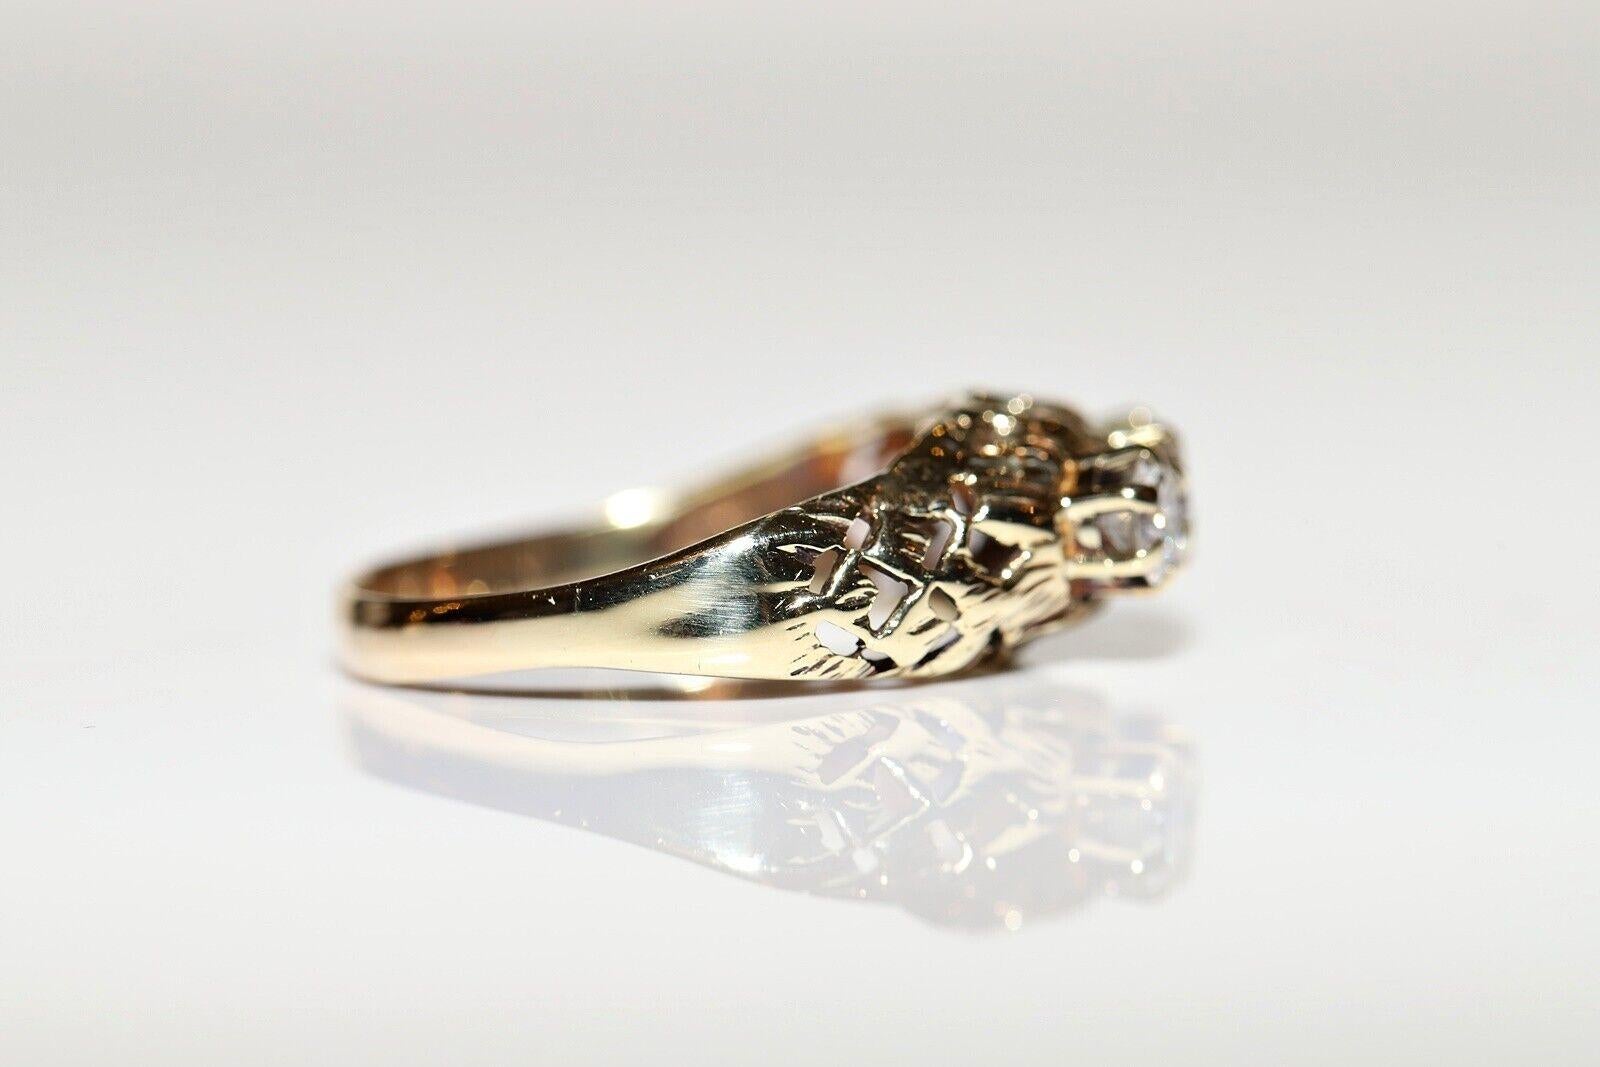 Brilliant Cut Antique Circa 1900s 14k Gold Natural Diamond Decorated Ring For Sale